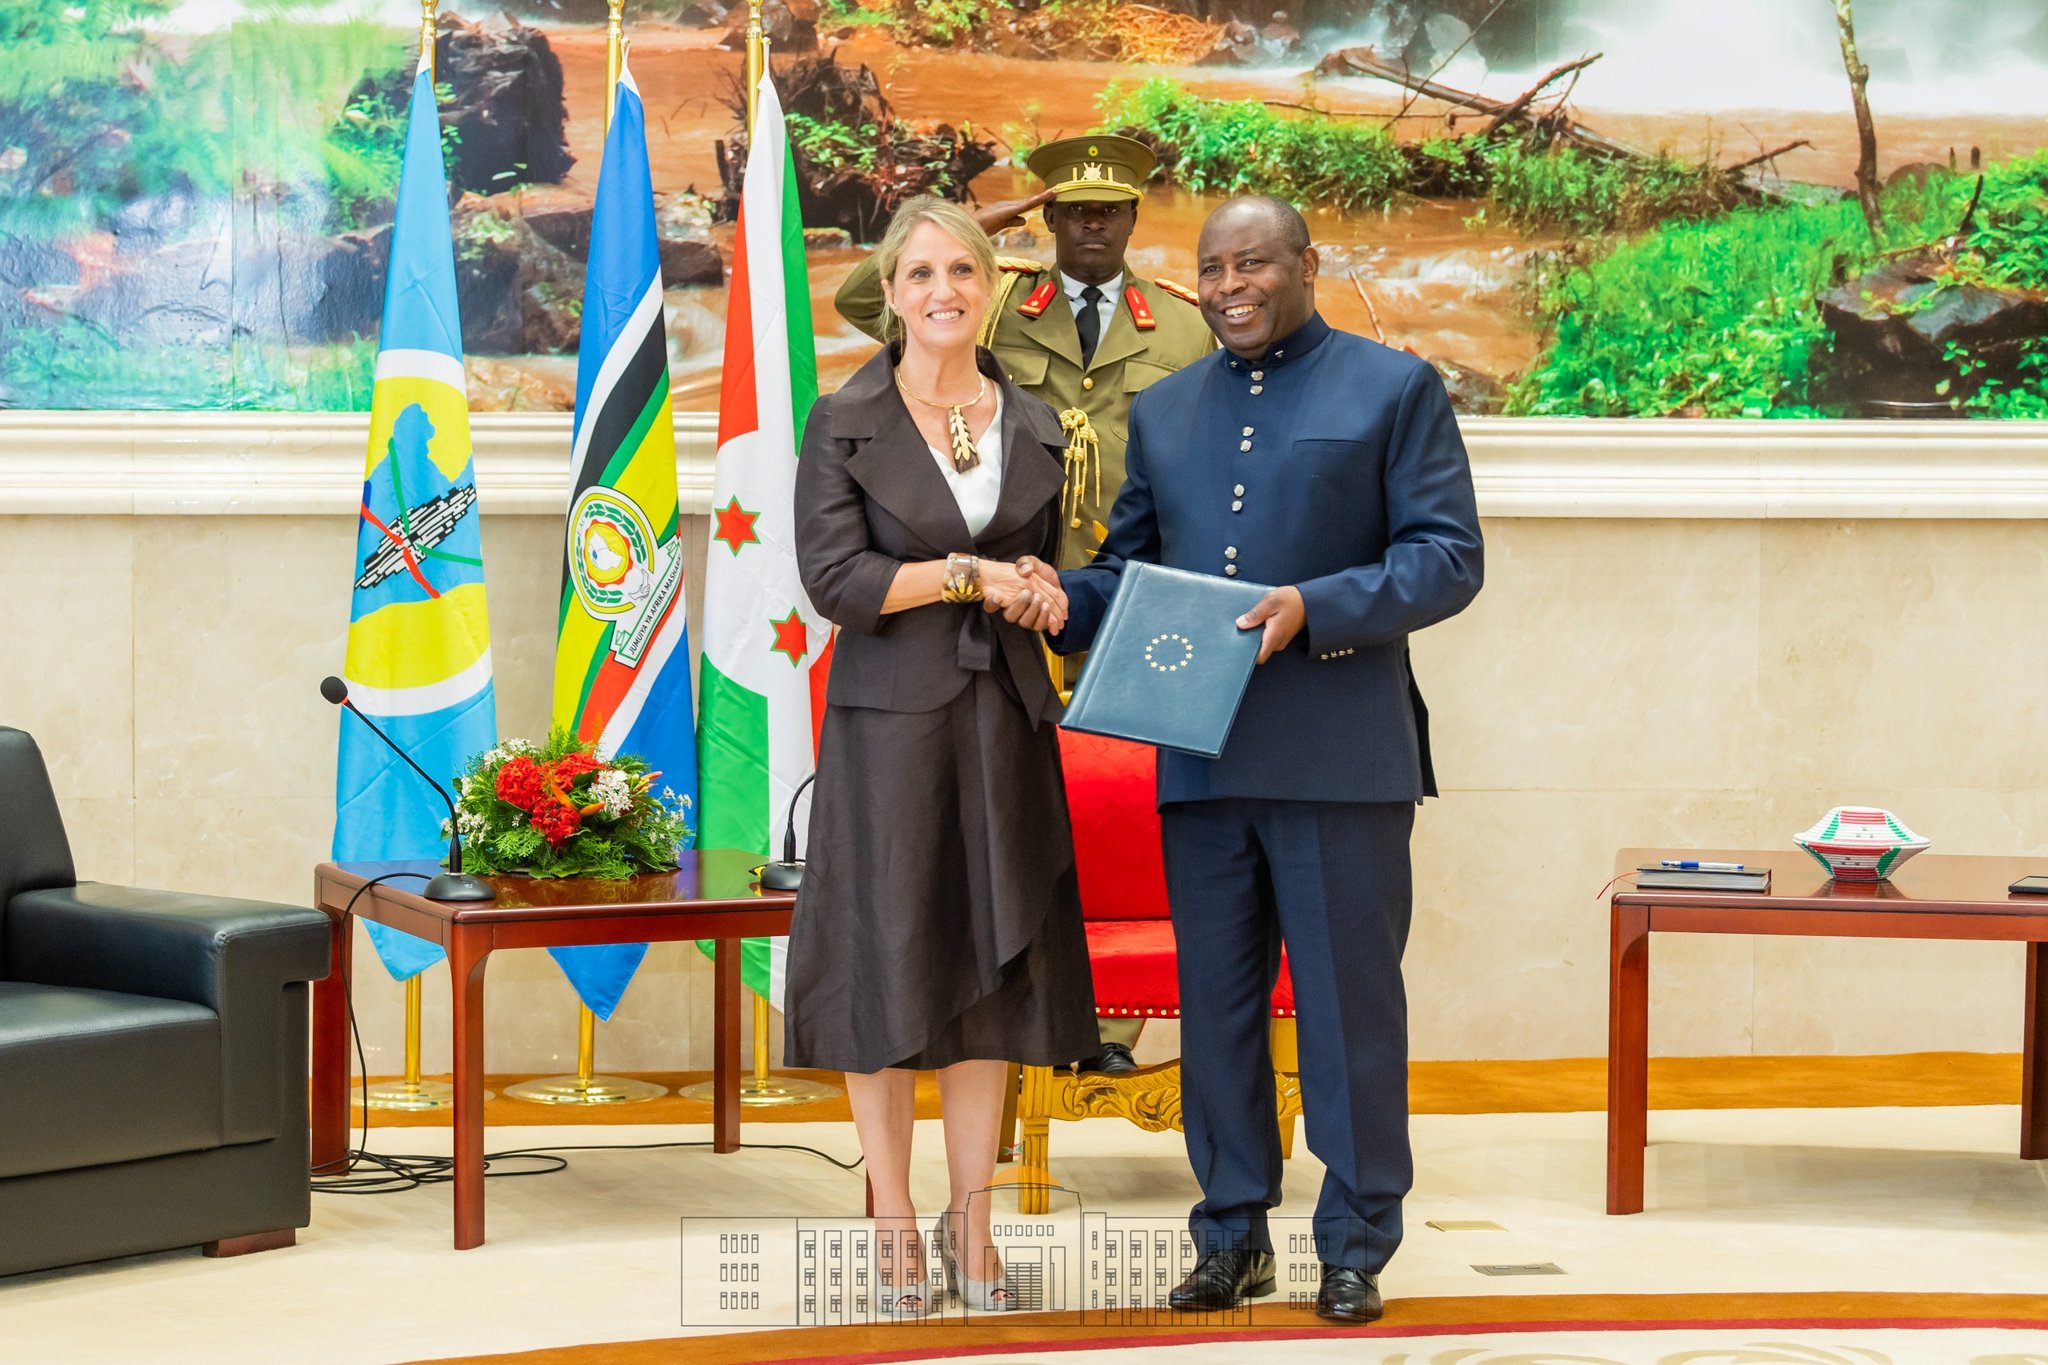 Le Président Ndayishimiye reçoit les lettres de créance de sept Ambassadeurs